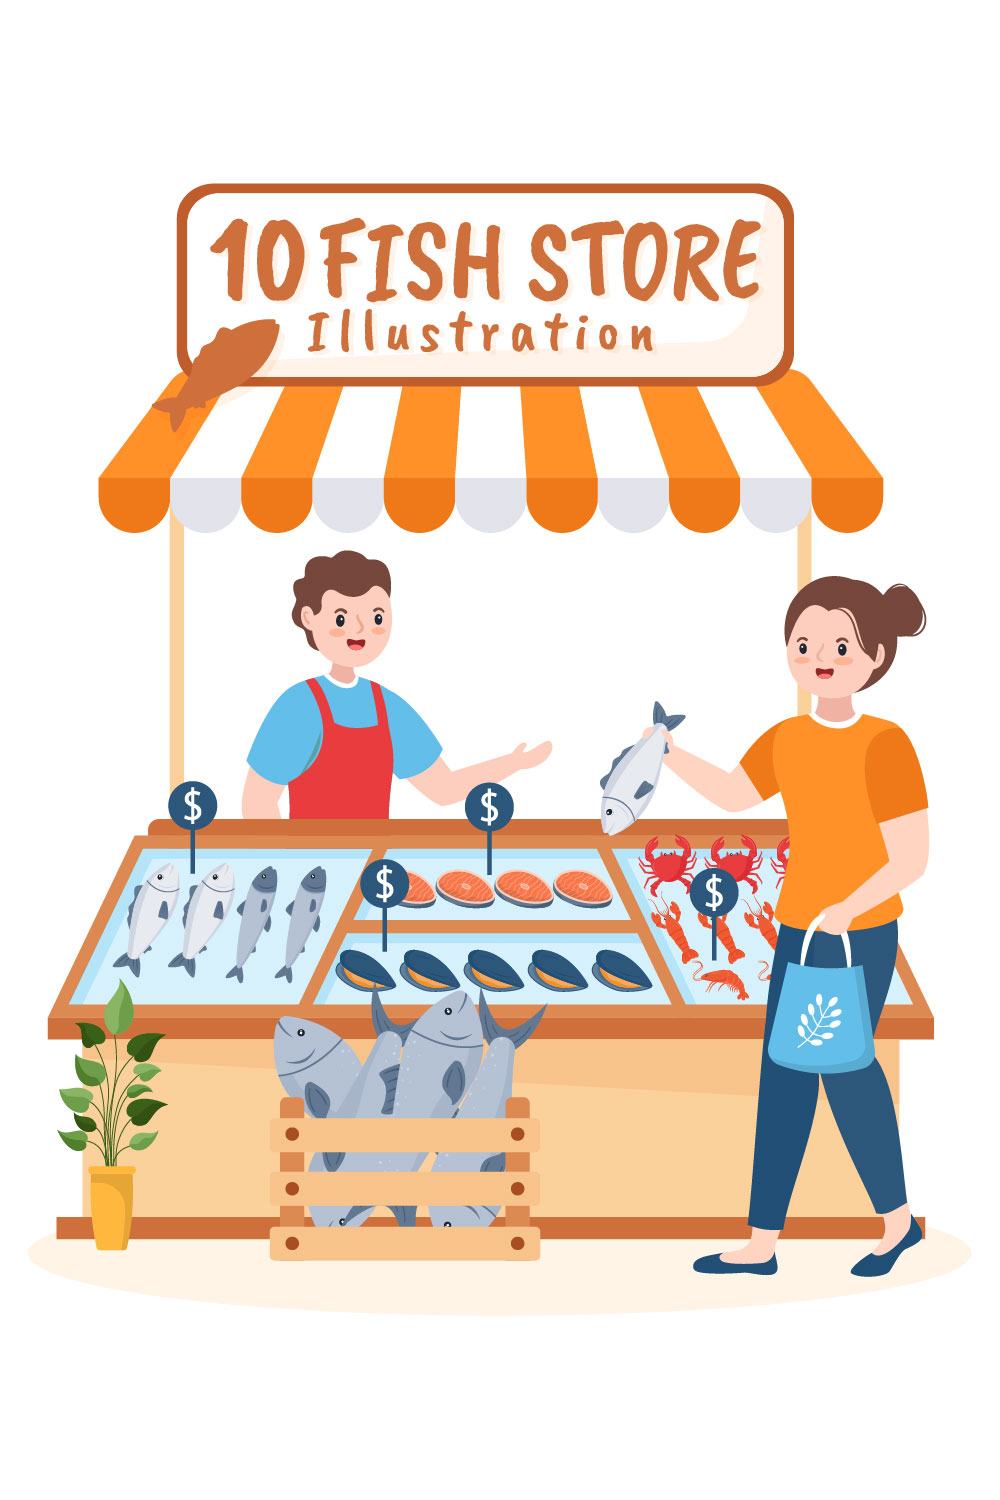 Fish Store Design Illustration pinterest image.